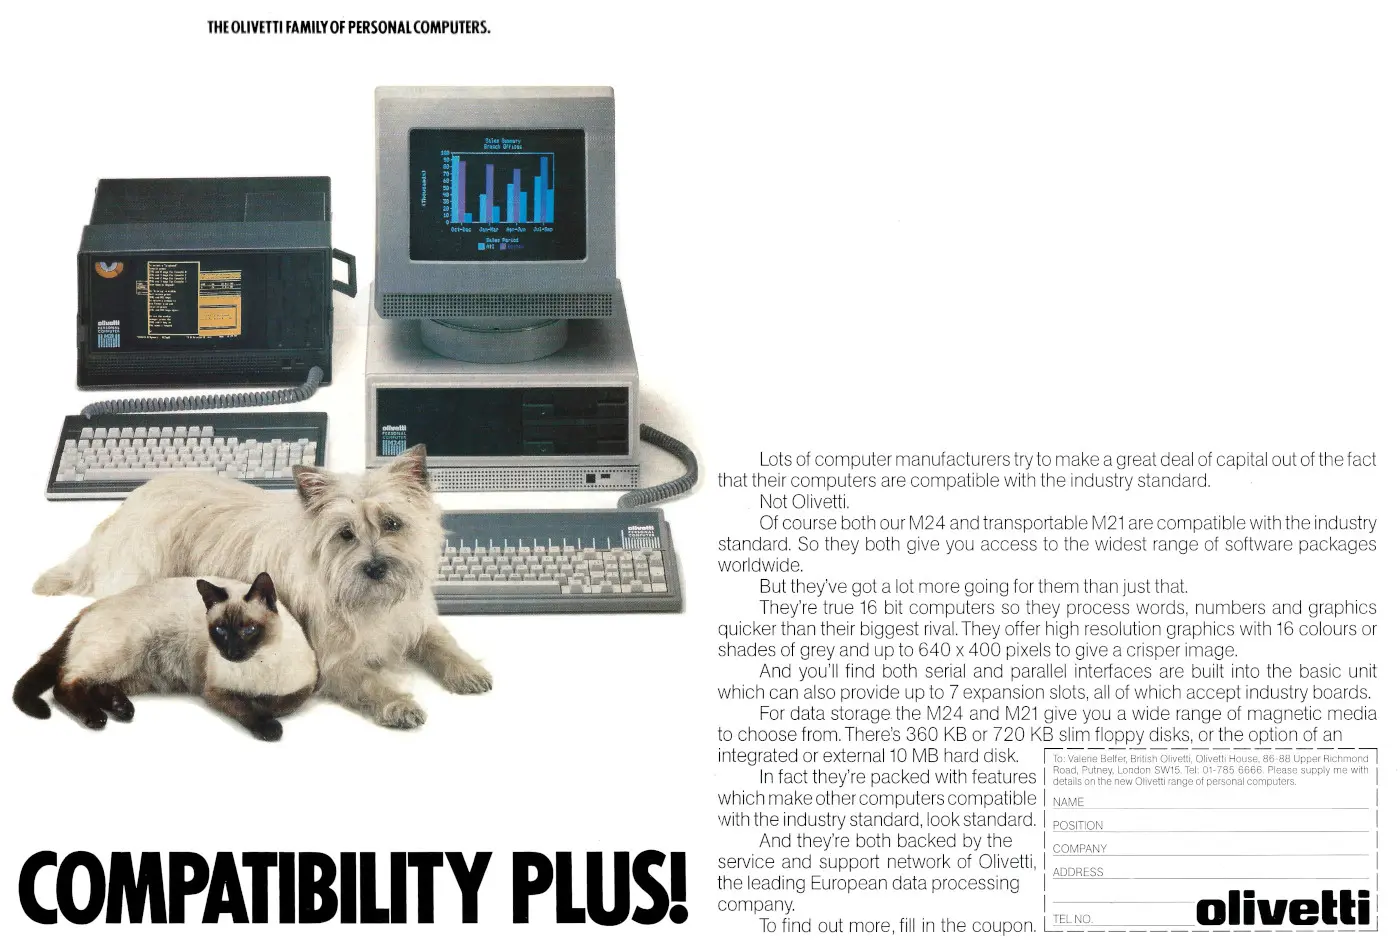 Olivetti Advert: <b>Olivetti - Compatibility plus!</b>, from Personal Computer World, December 1984